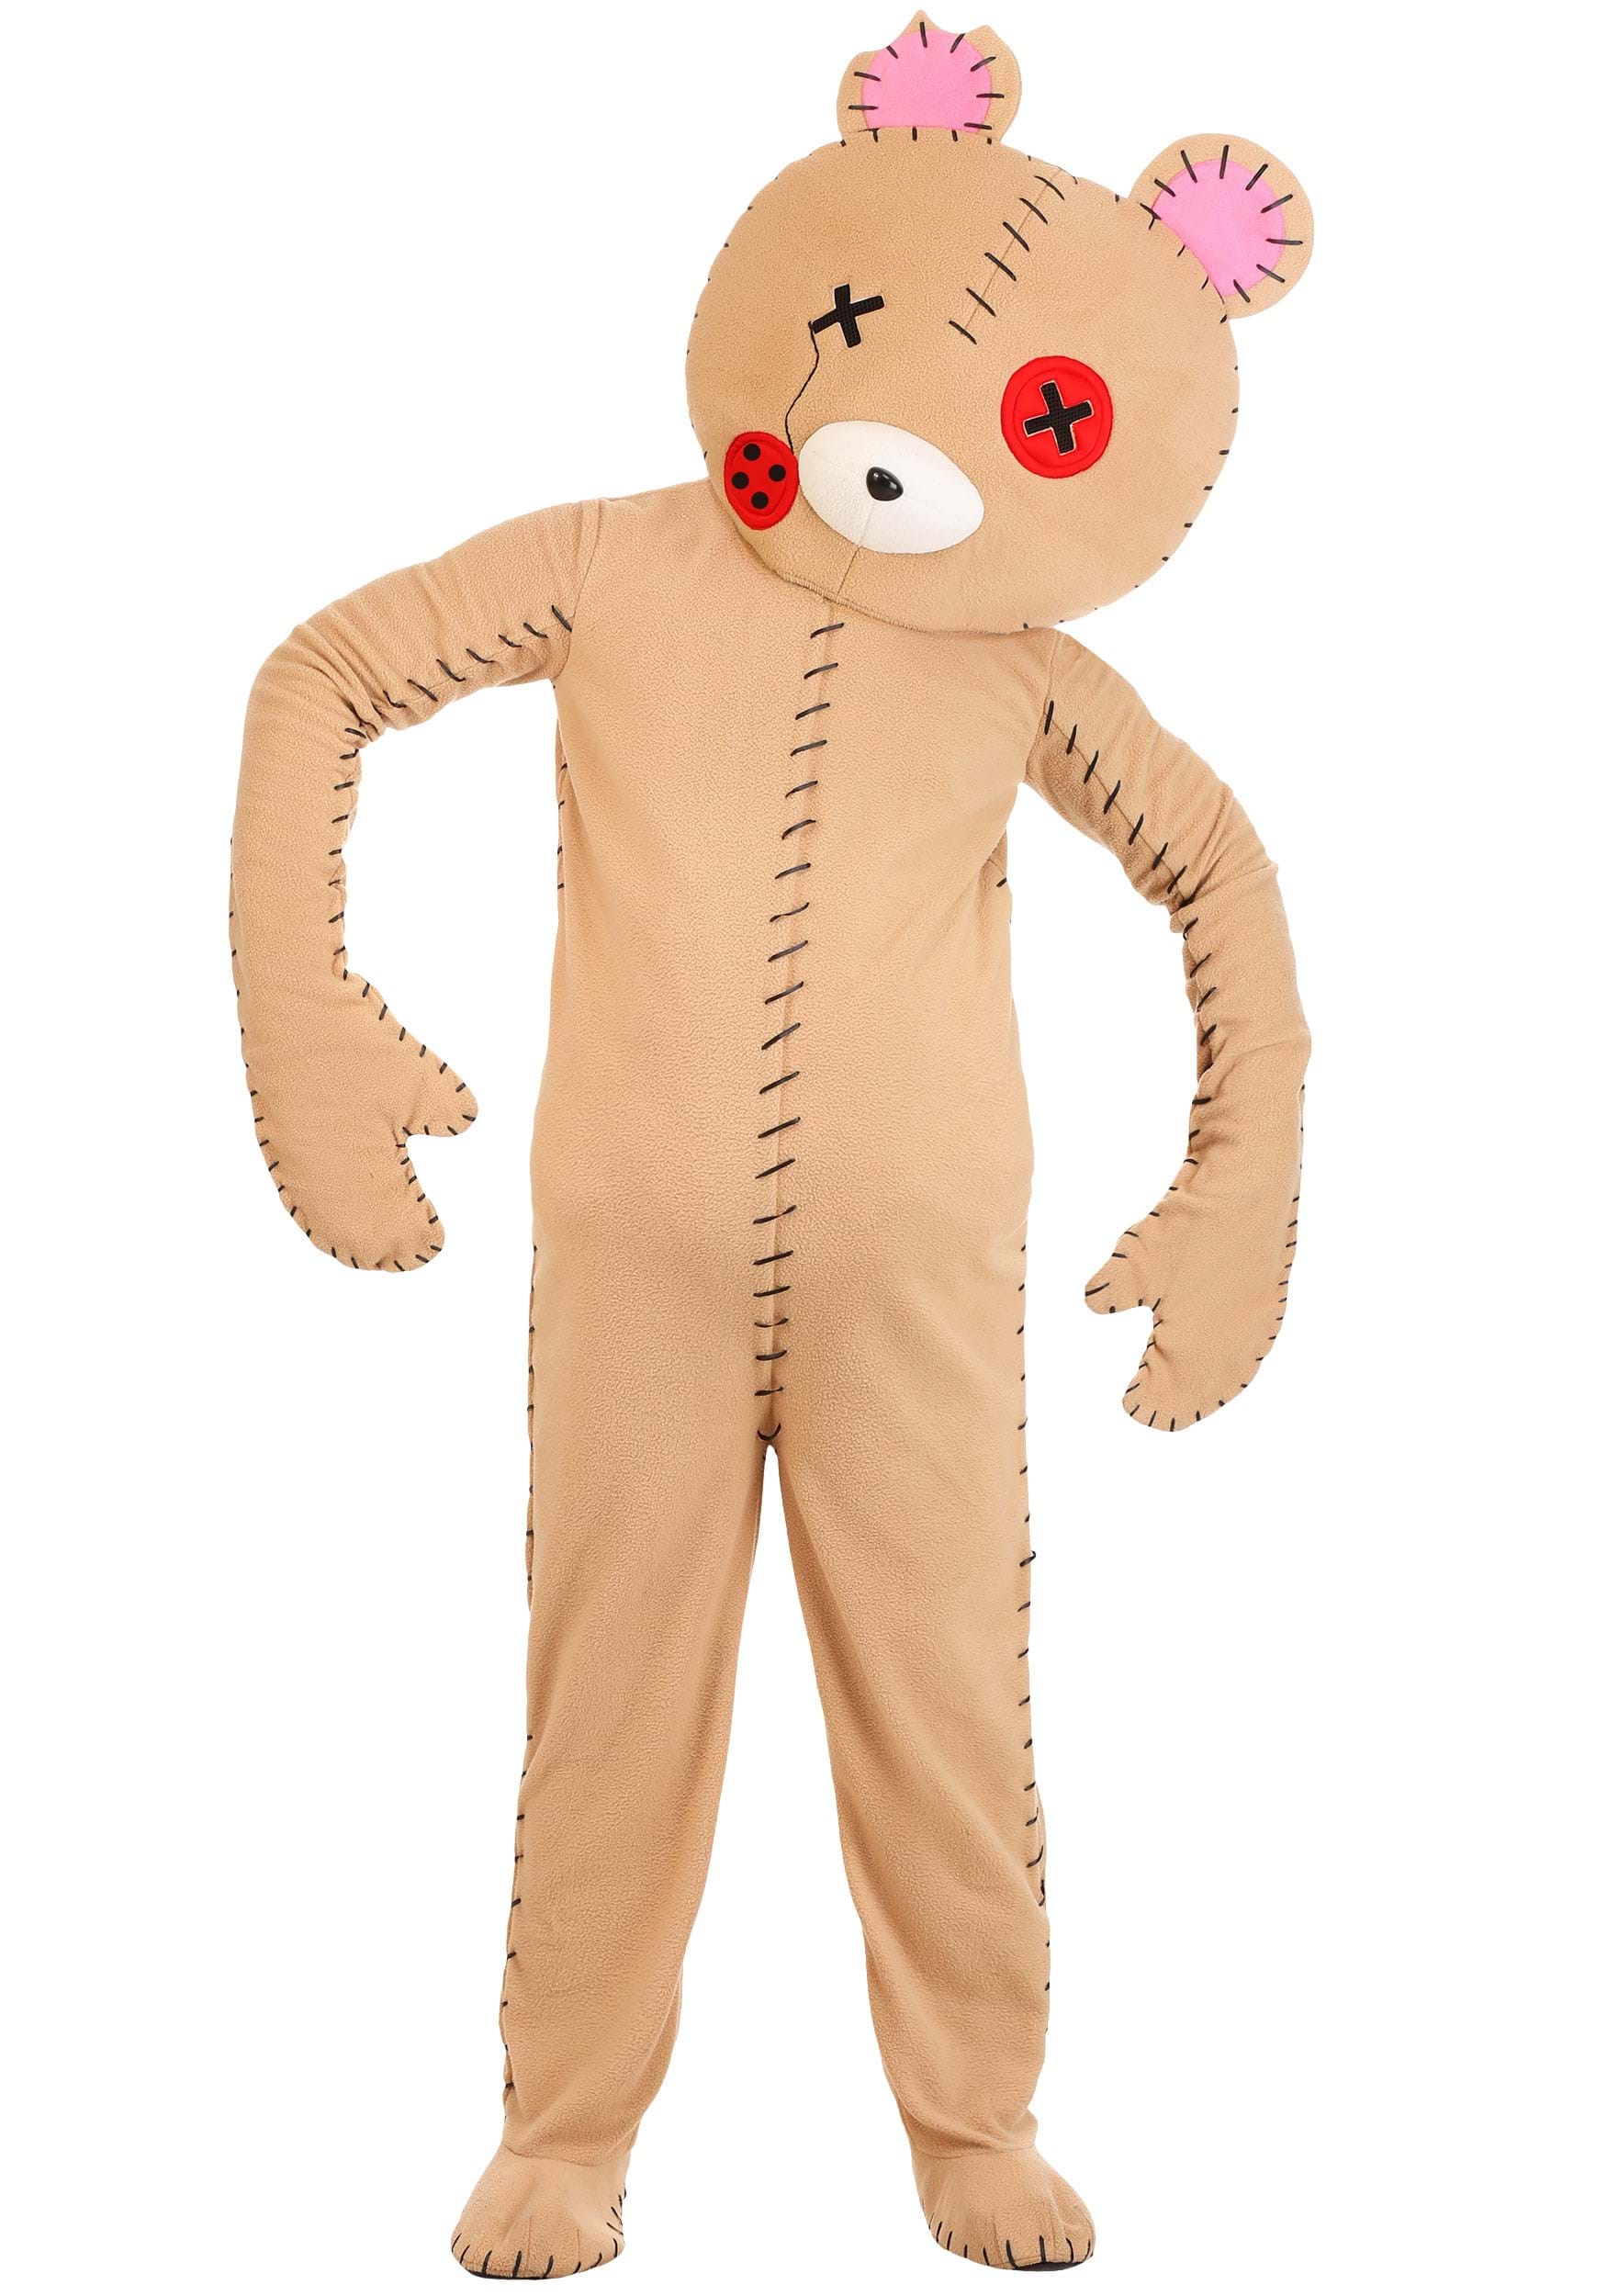 Image of Lifeless Bear Costume for Adults ID FUN7279AD-XL